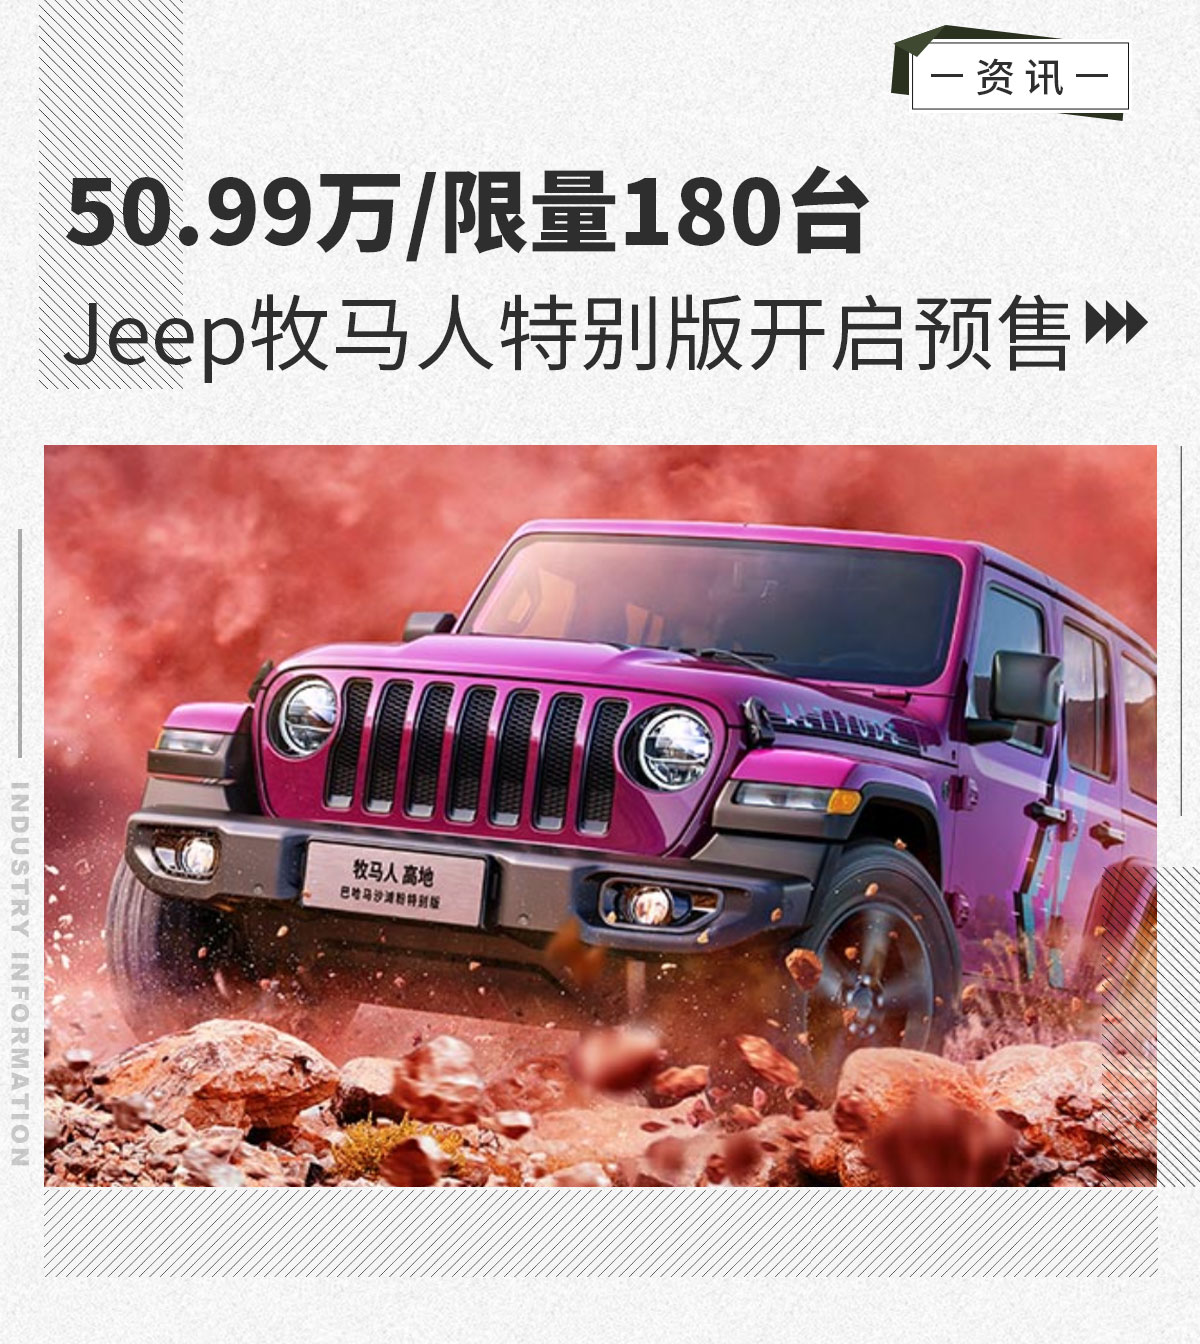 Jeep牧马人特别版开启预售 50.99万/限量180台